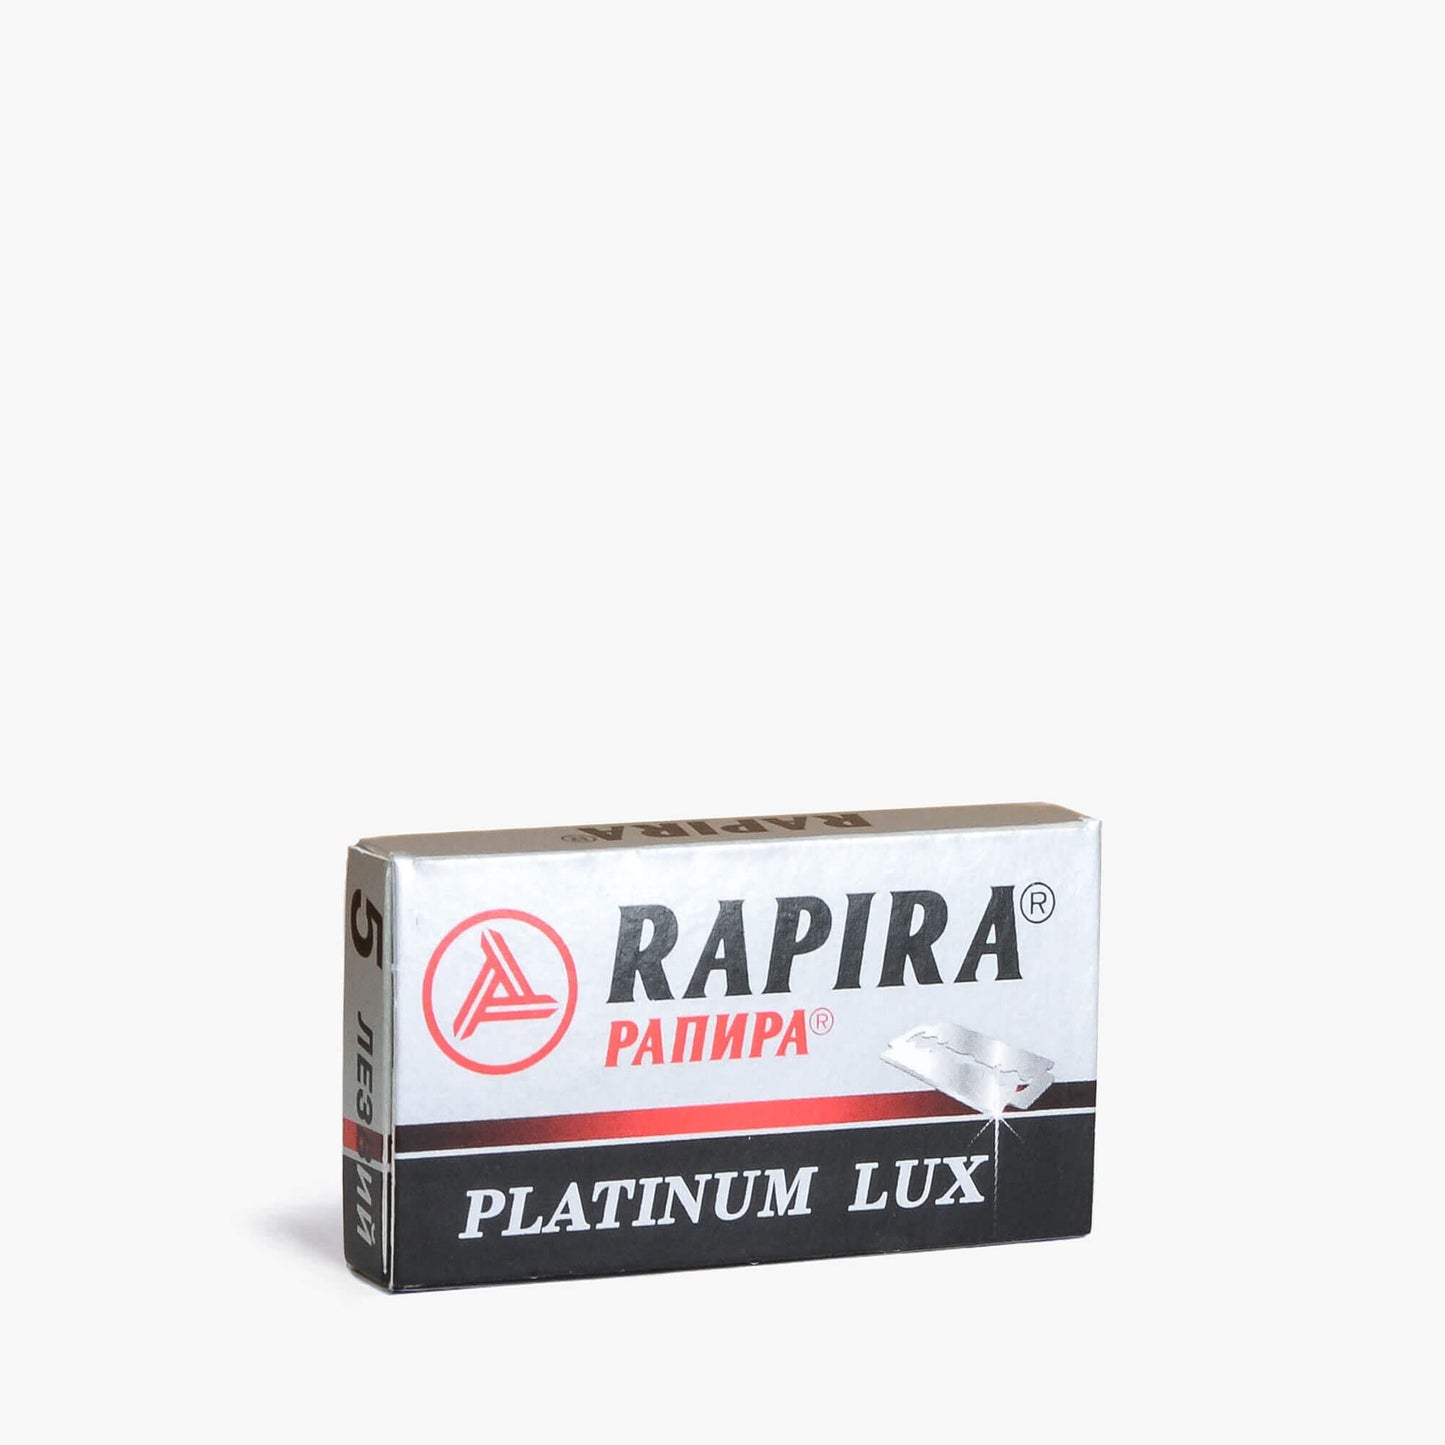 Rapira Platinum Lux Double Edge Razor Blades